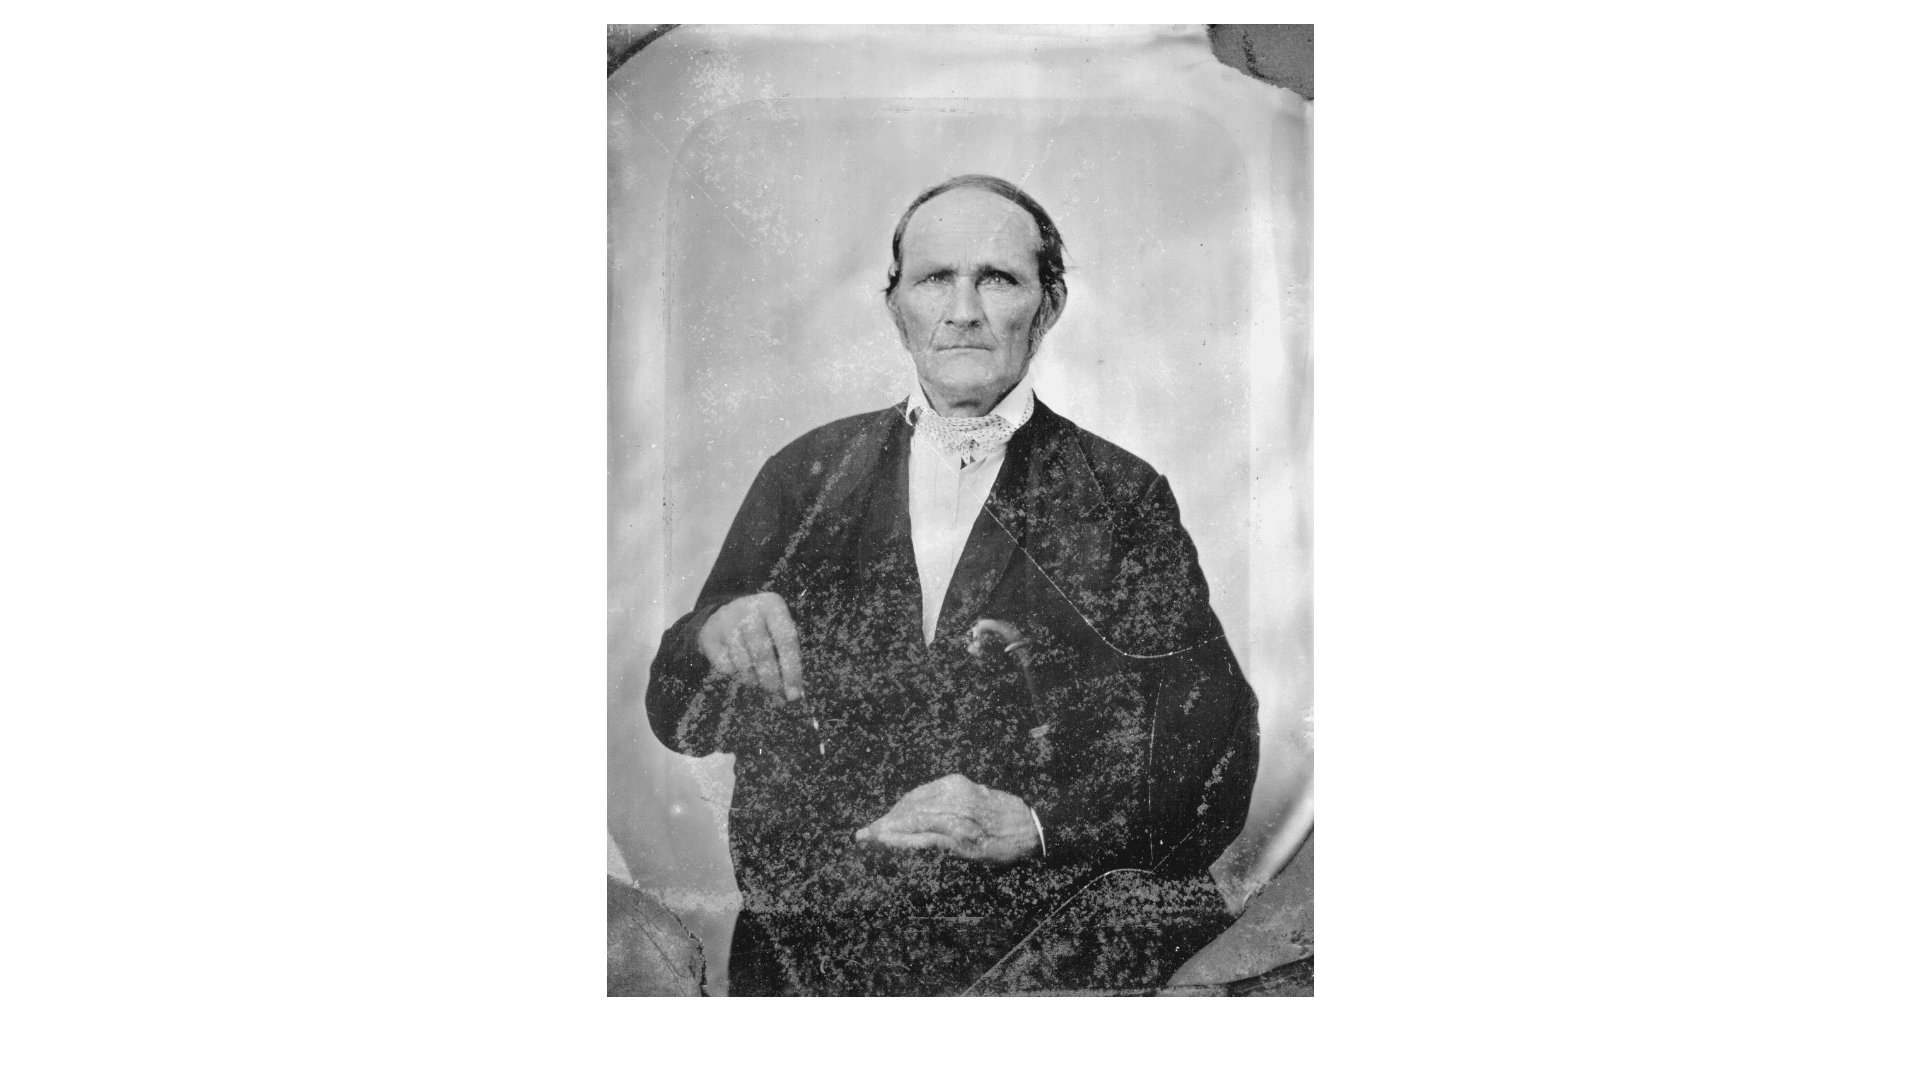 Tintype portrait of Jesse Root Gran